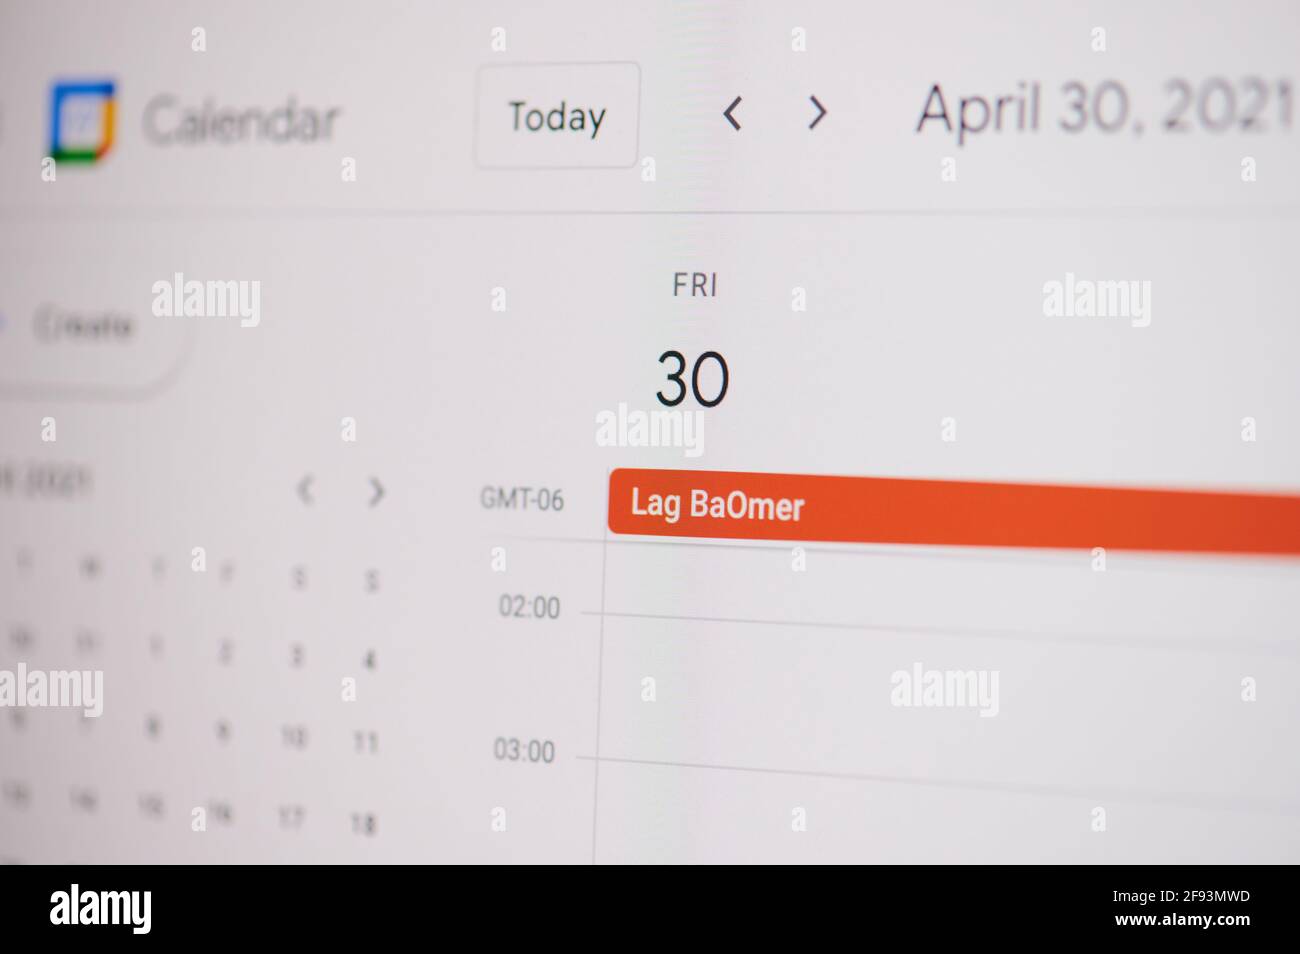 New york, USA - February 17, 2021: Lag BaOmer 30 of April on google calendar on laptop screen close up view. Stock Photo